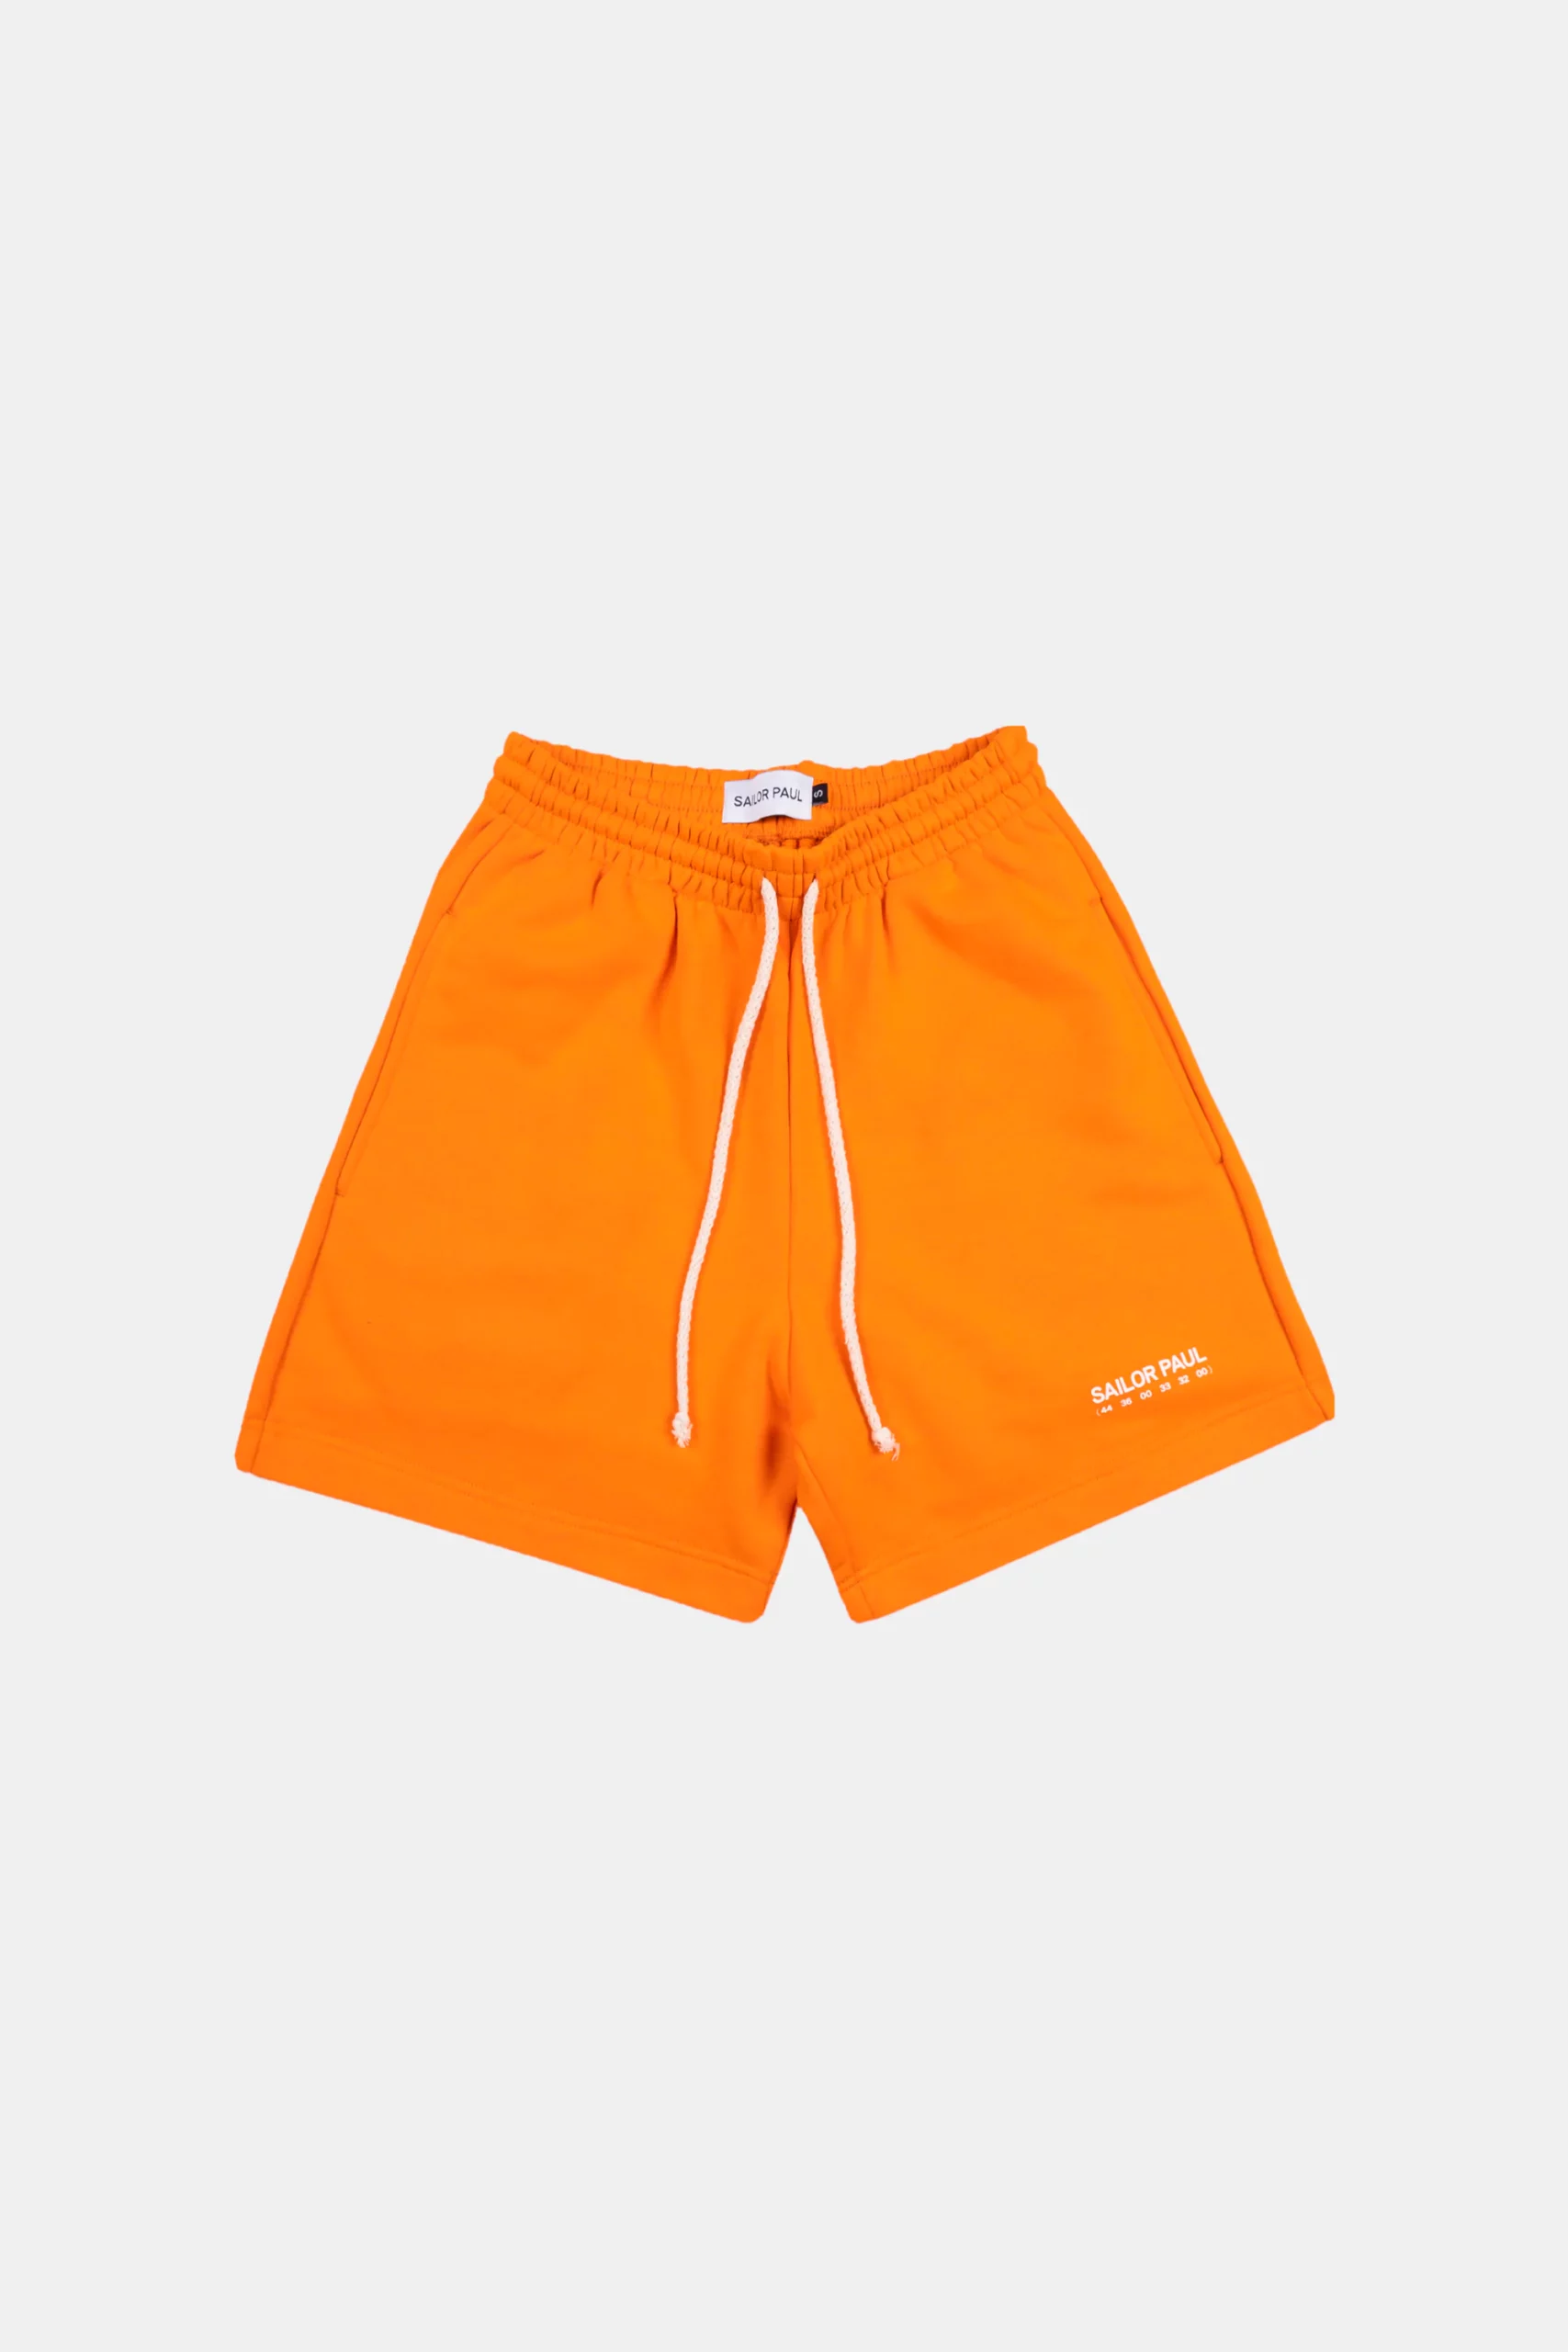 shorty sailorpaul tet logo orange w 1